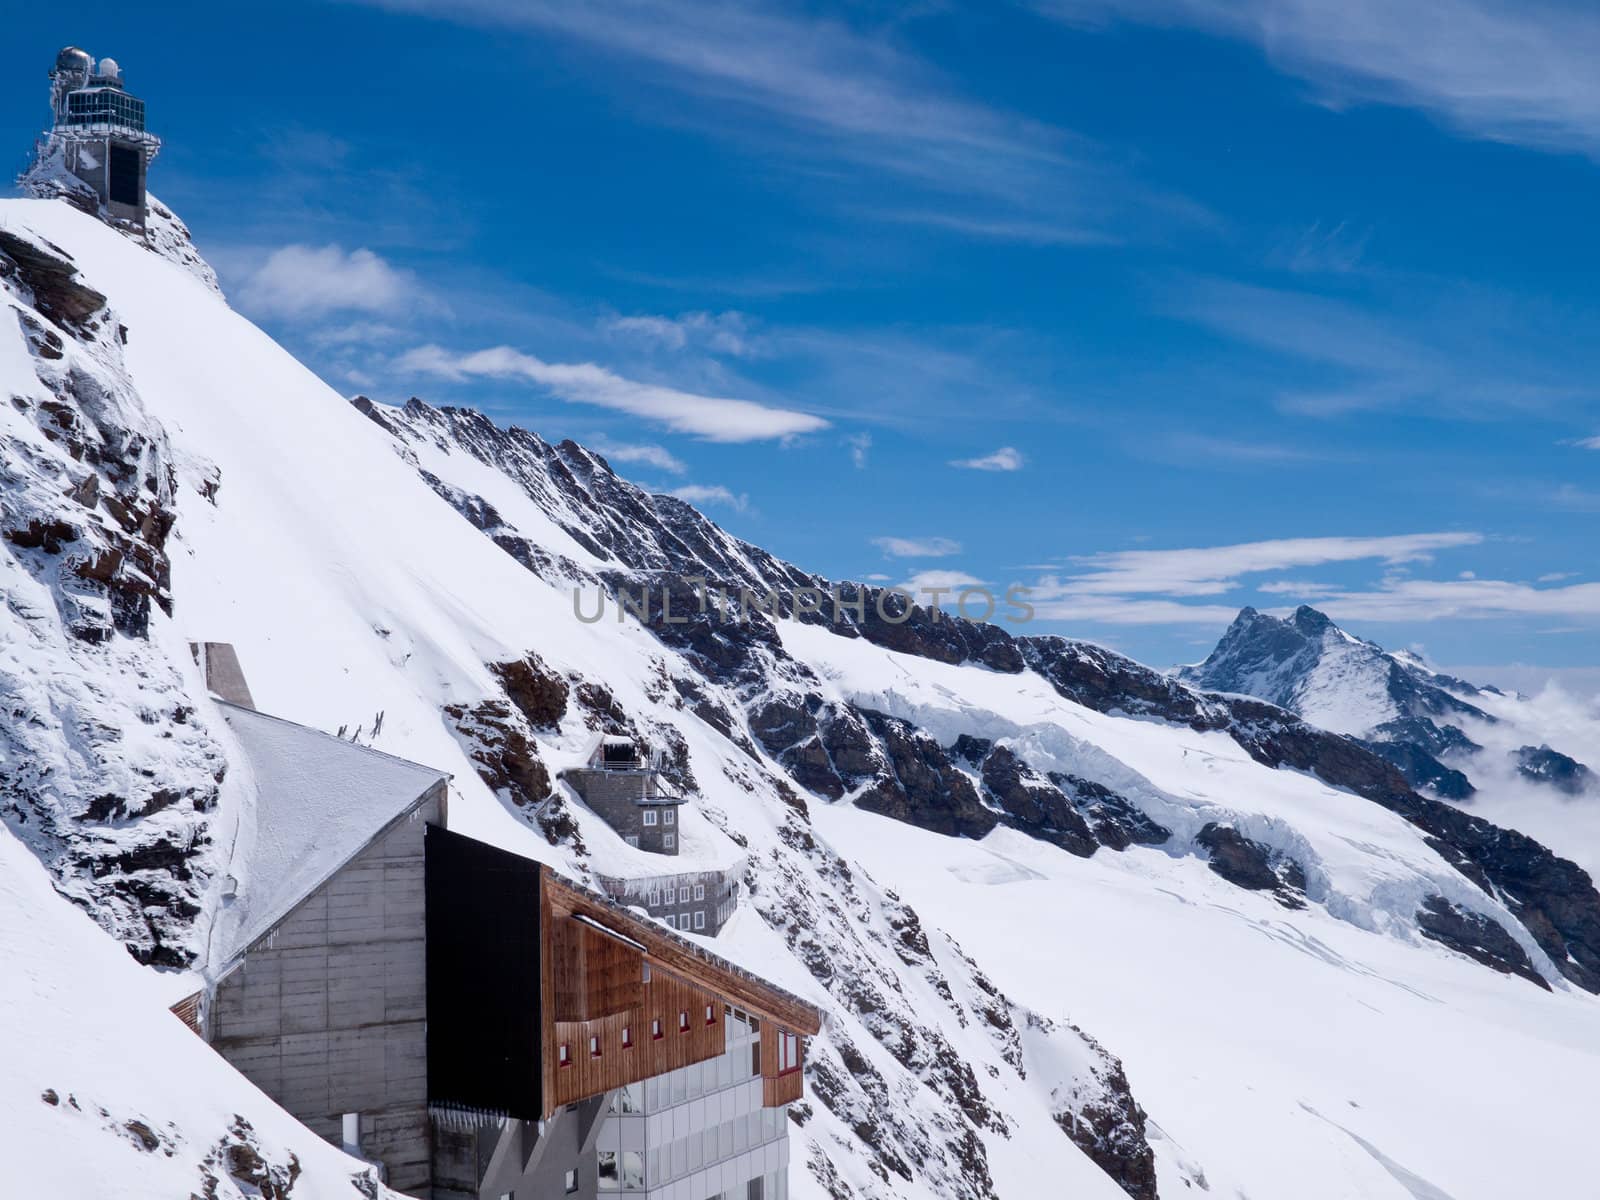 Viewpoint on Jungfraujoch by steheap